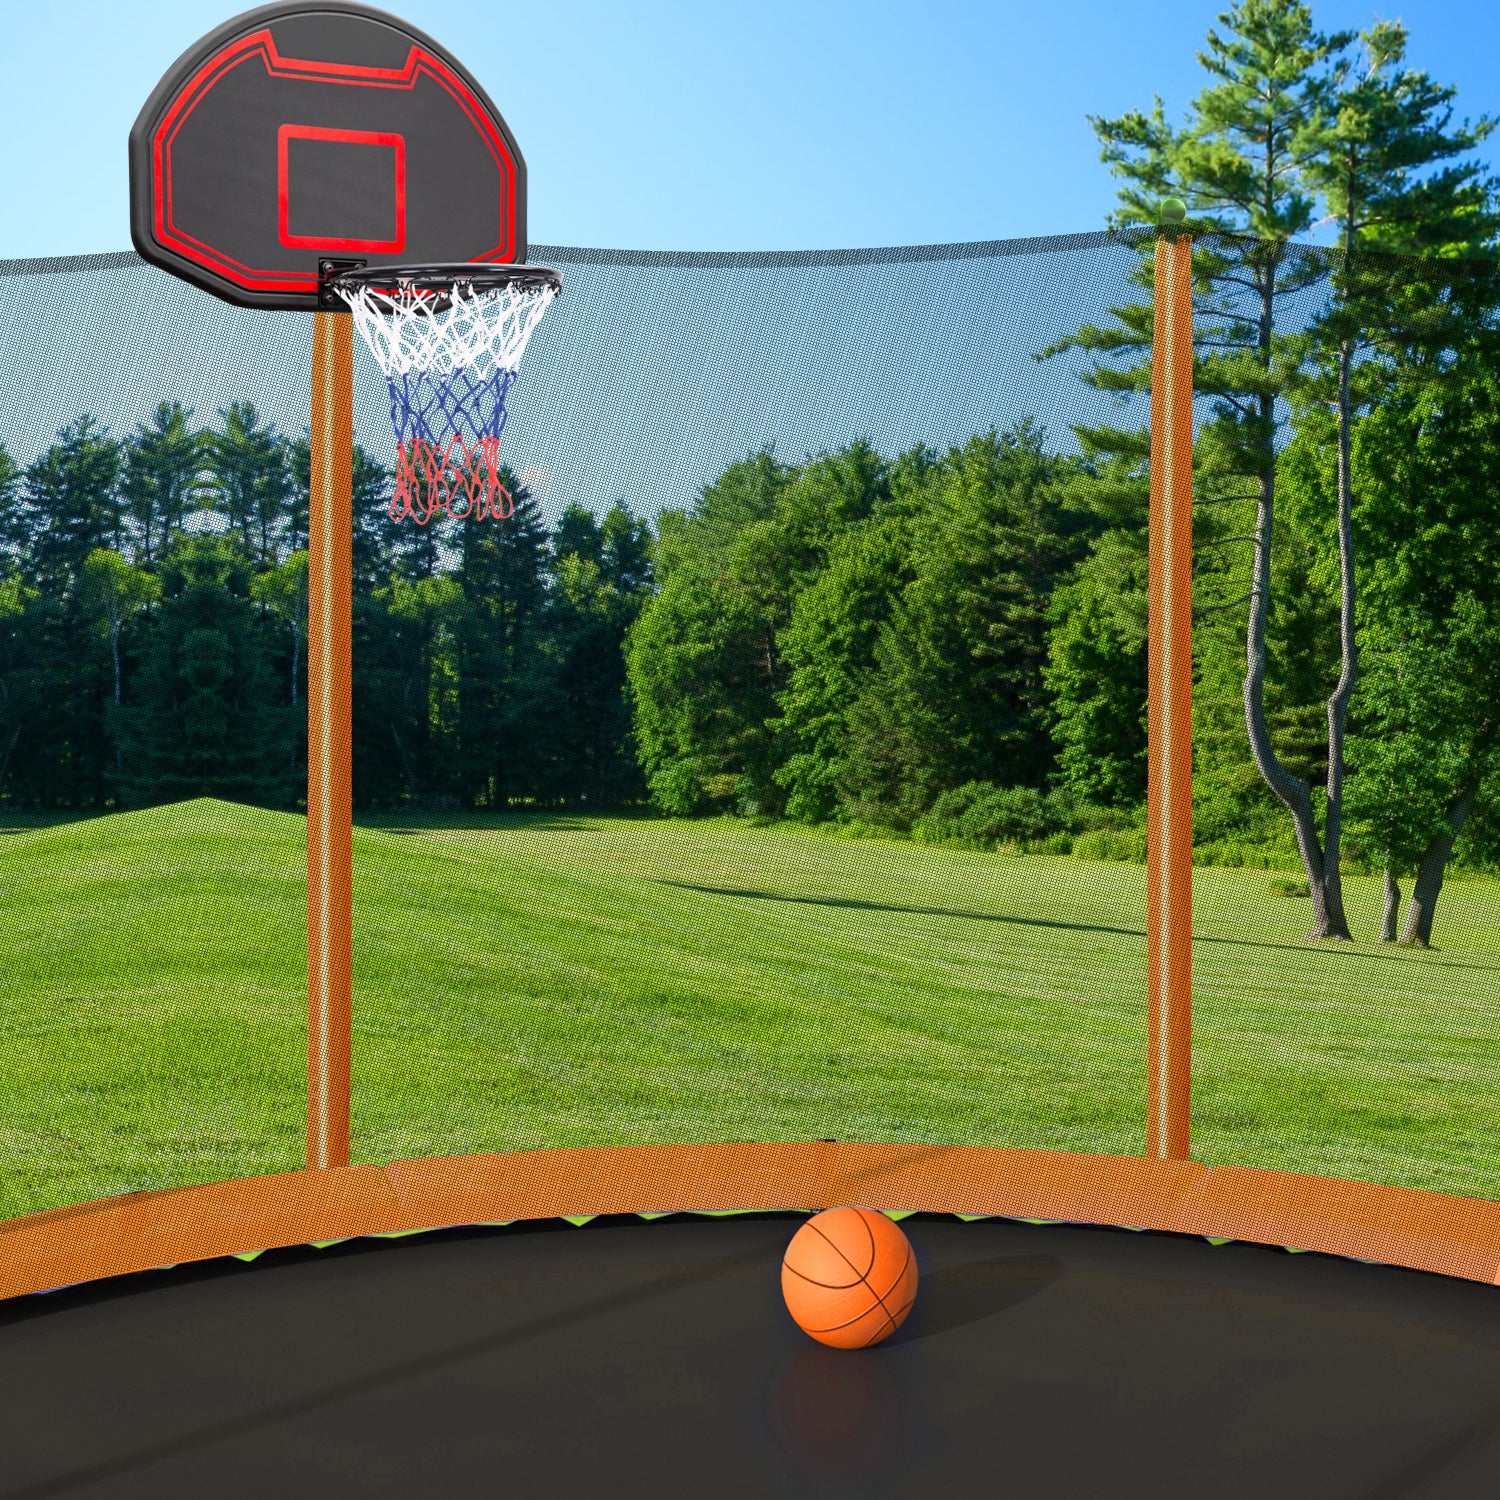 10FT Trampoline with Basketball Hoop Inflator and orange-metal